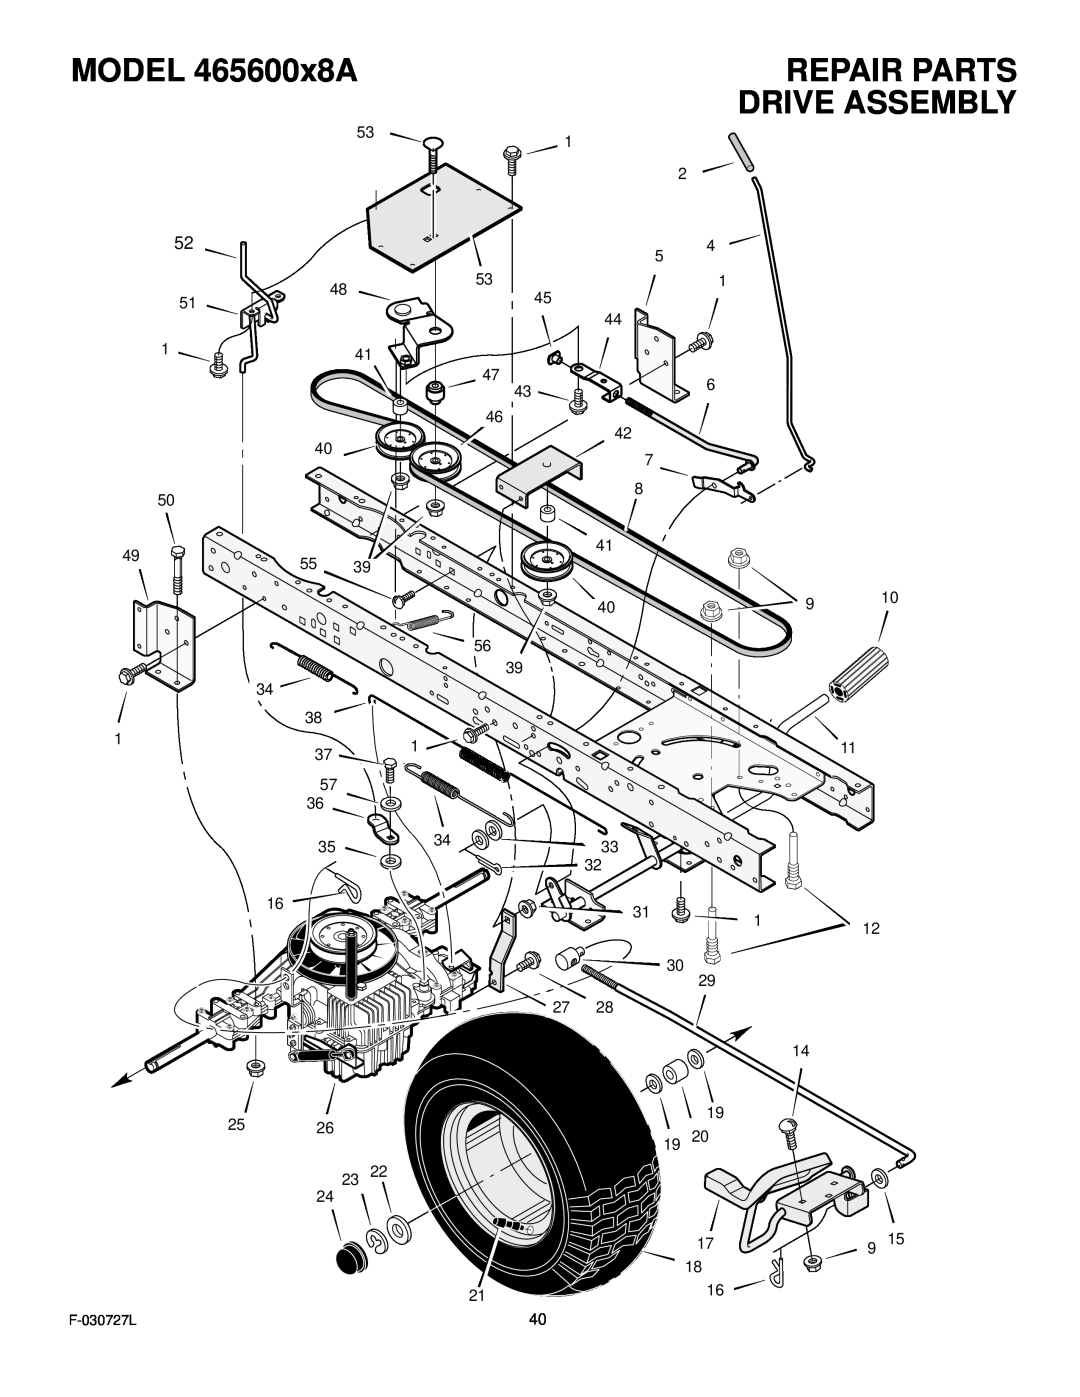 Murray manual Drive Assembly, MODEL 465600x8A, Repair Parts 